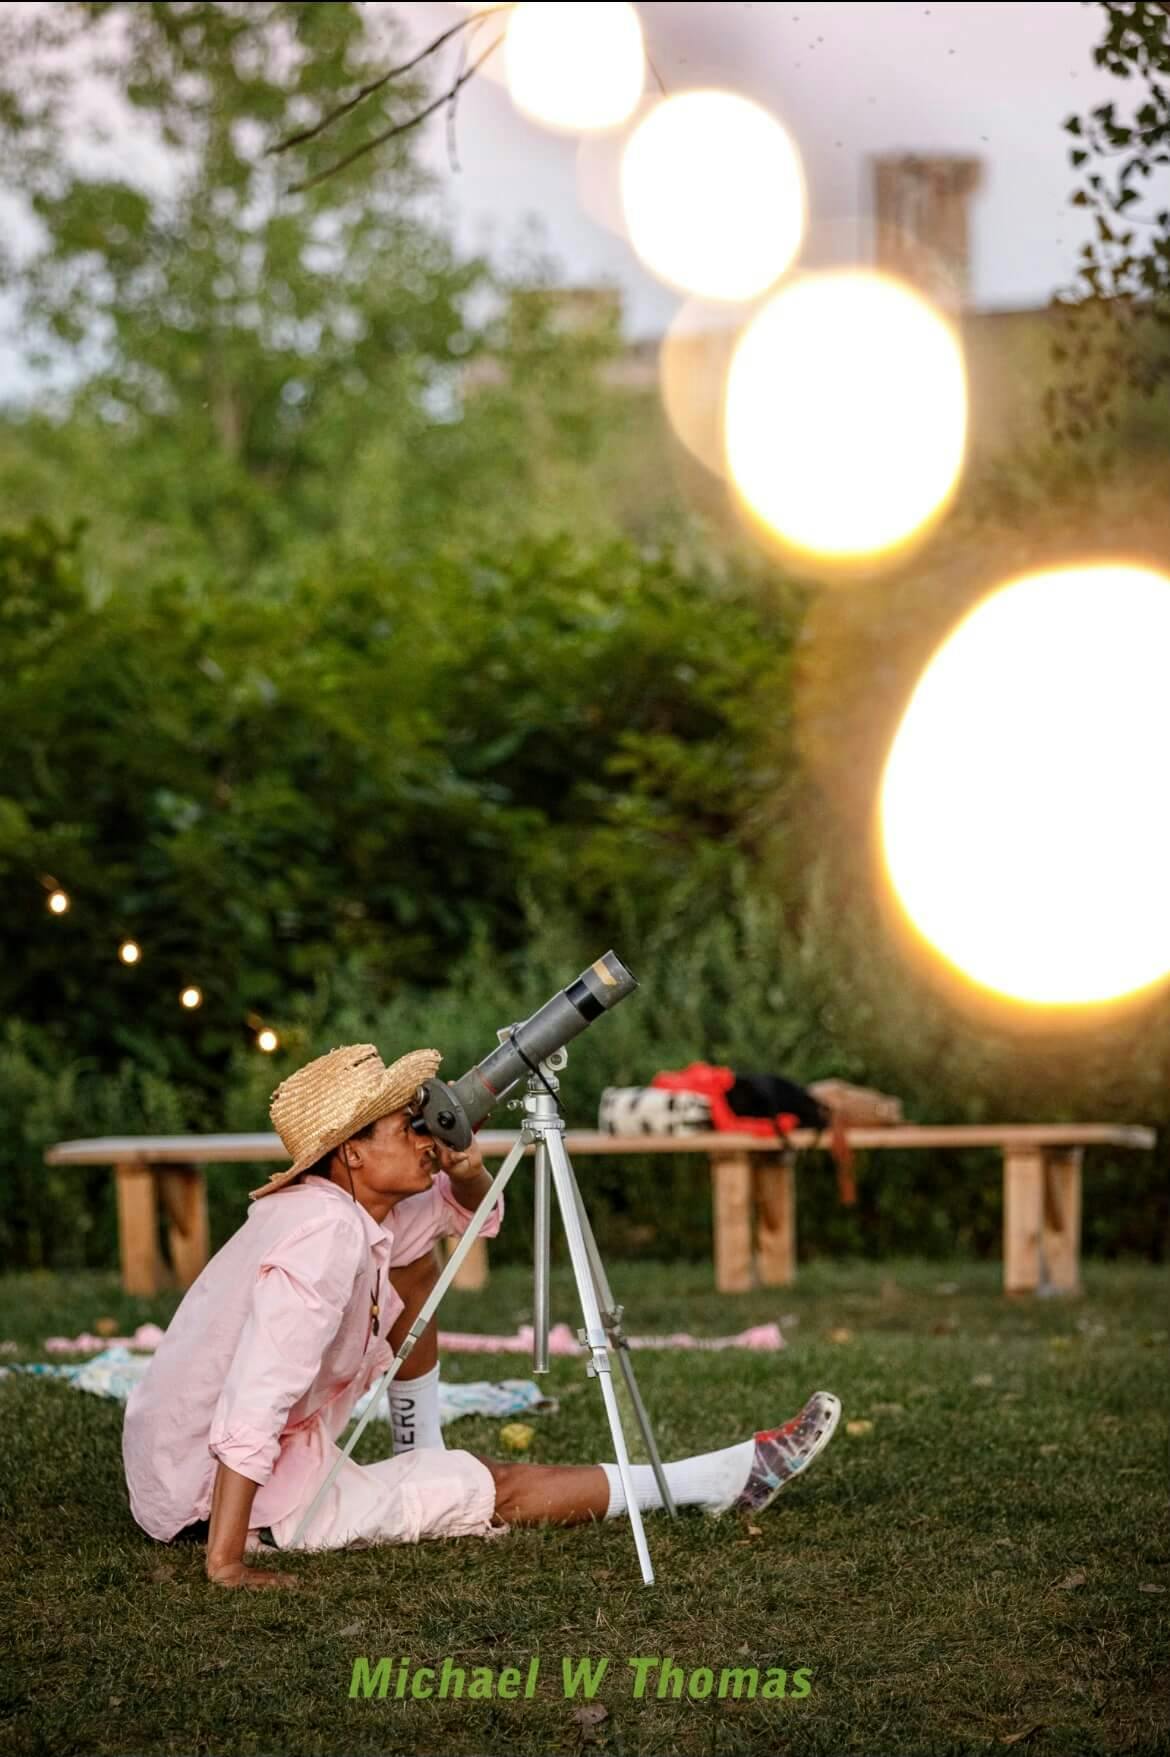 Man with Telescope